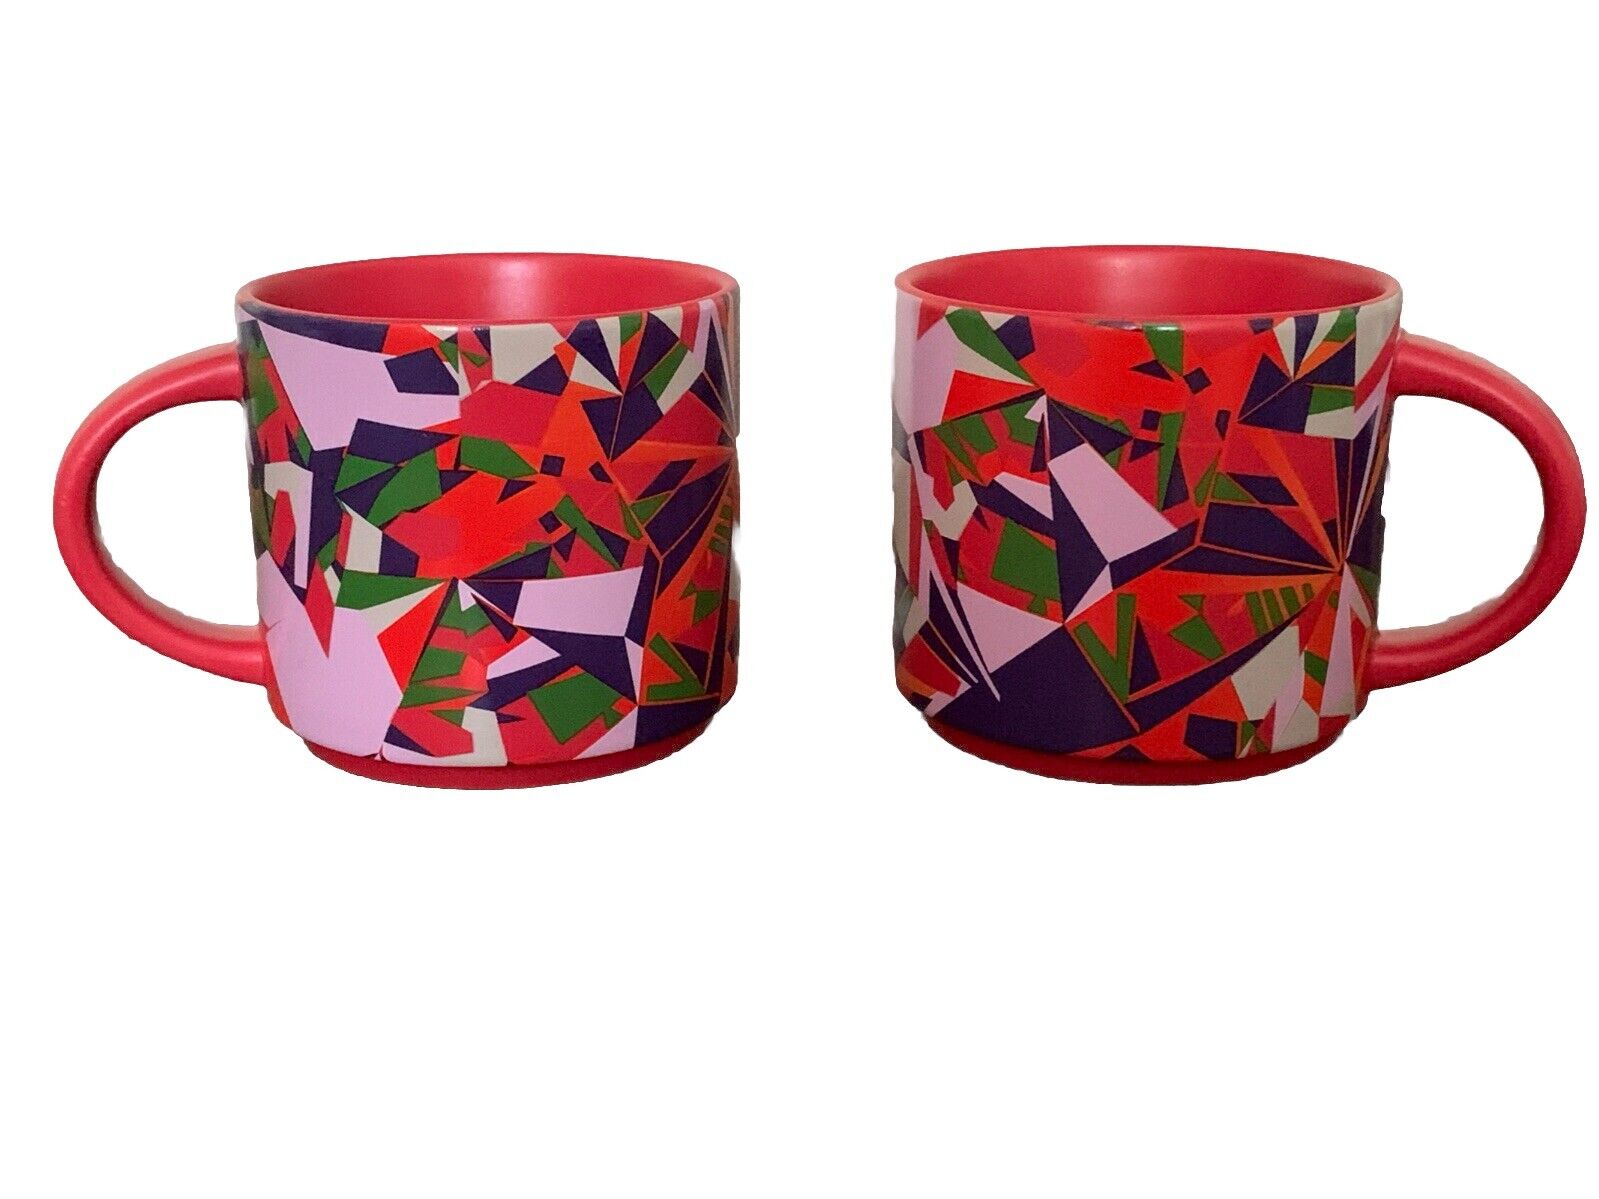 2 Starbucks Teavana Red Geometric Prism Tea Cup Coffee Mugs 2016 12 oz Stackable